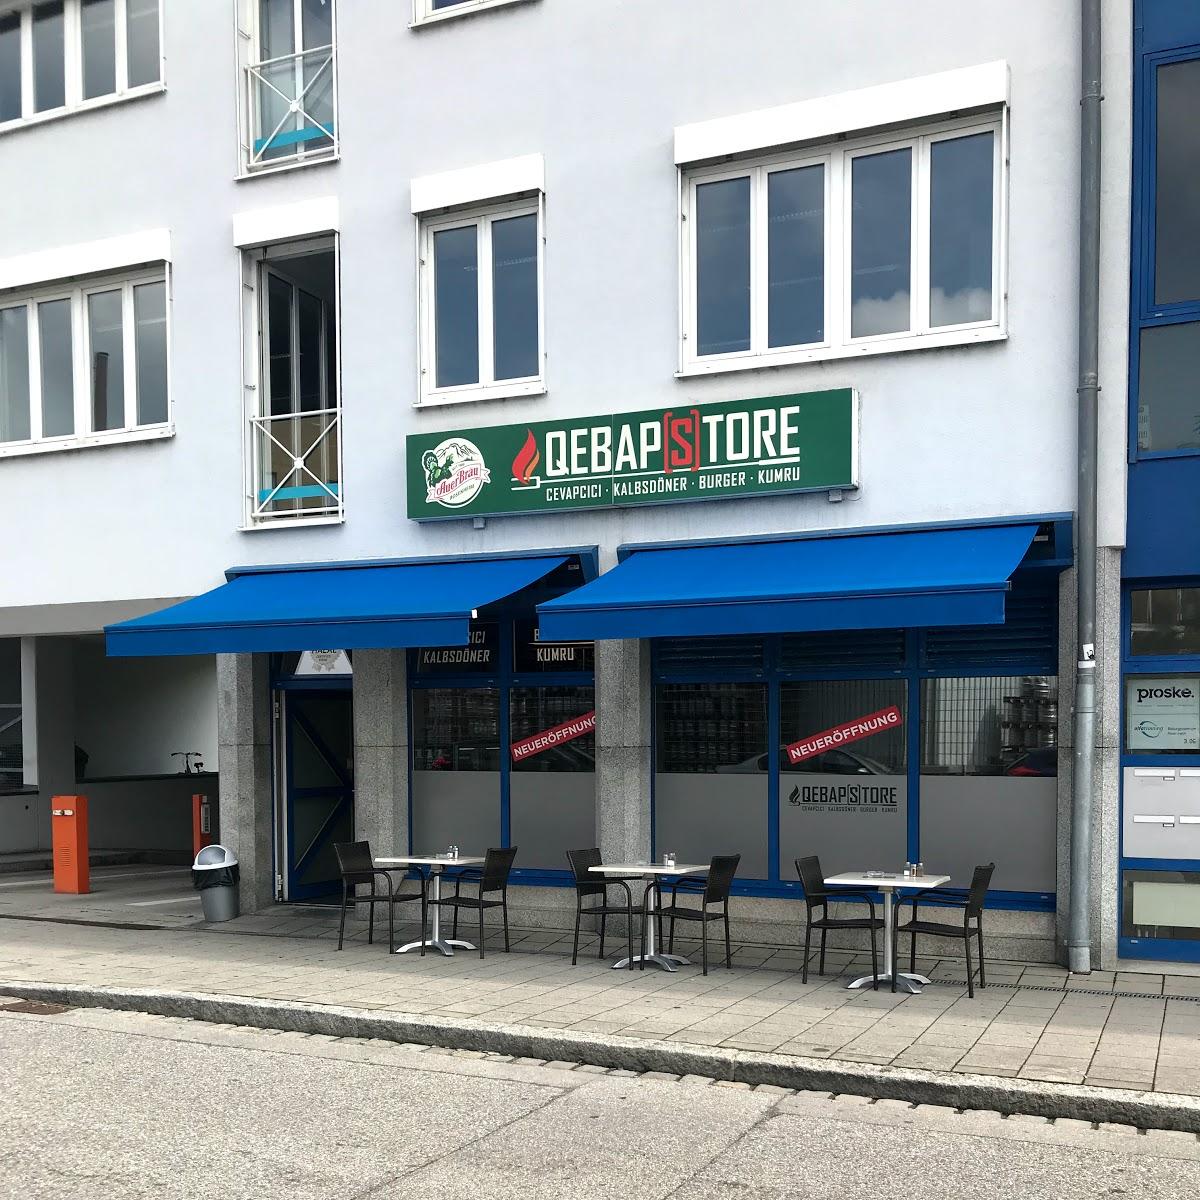 Restaurant "QebapStore" in  Rosenheim